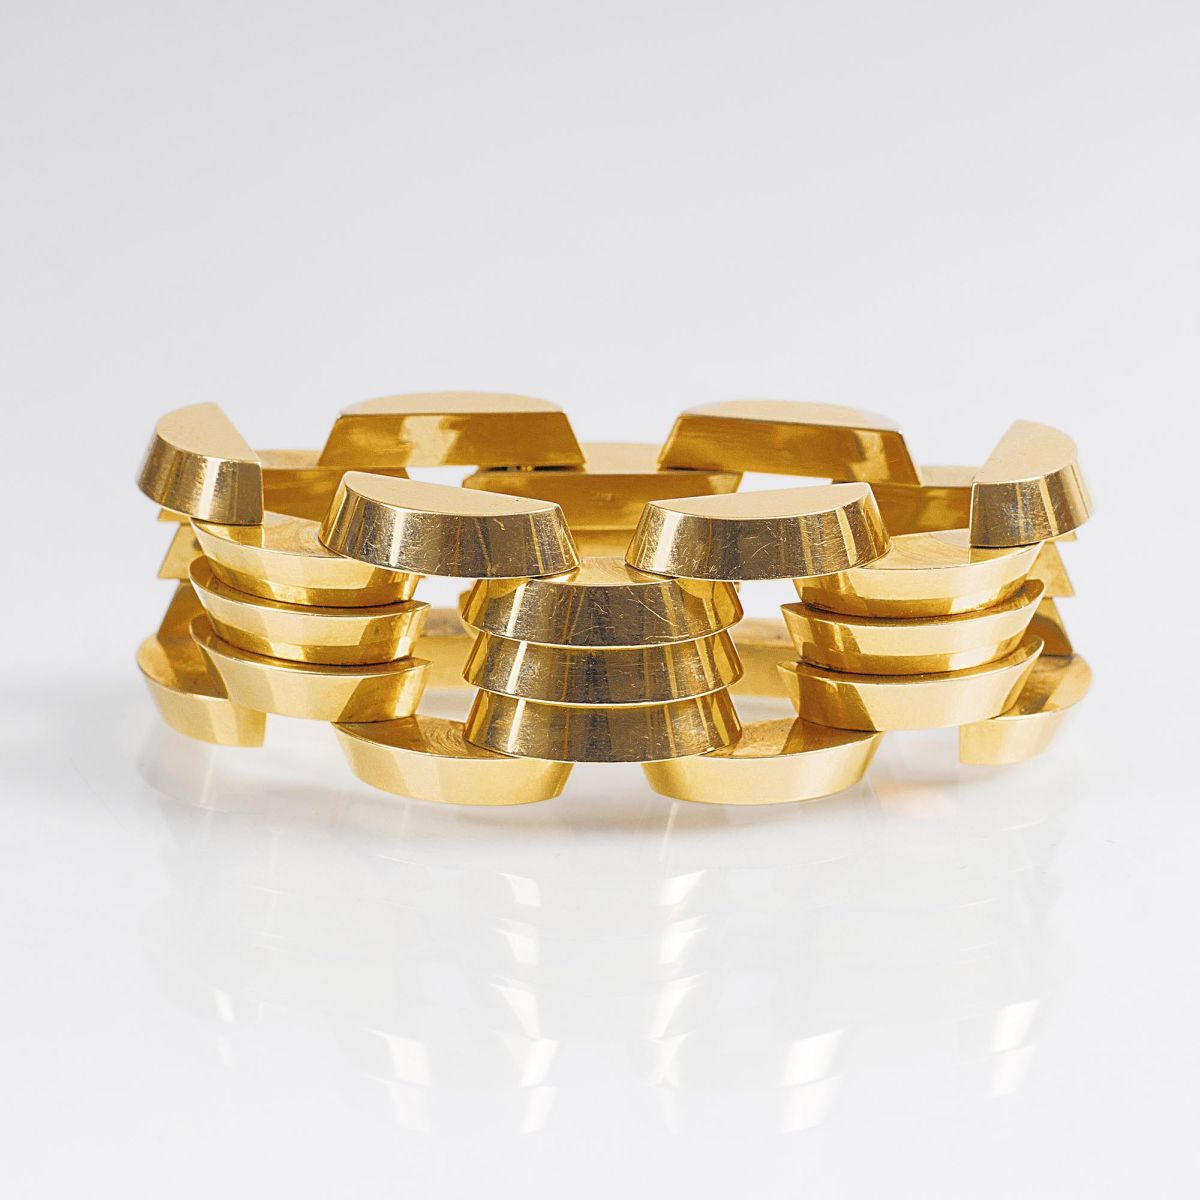 An Art-déco Gold Bracelet